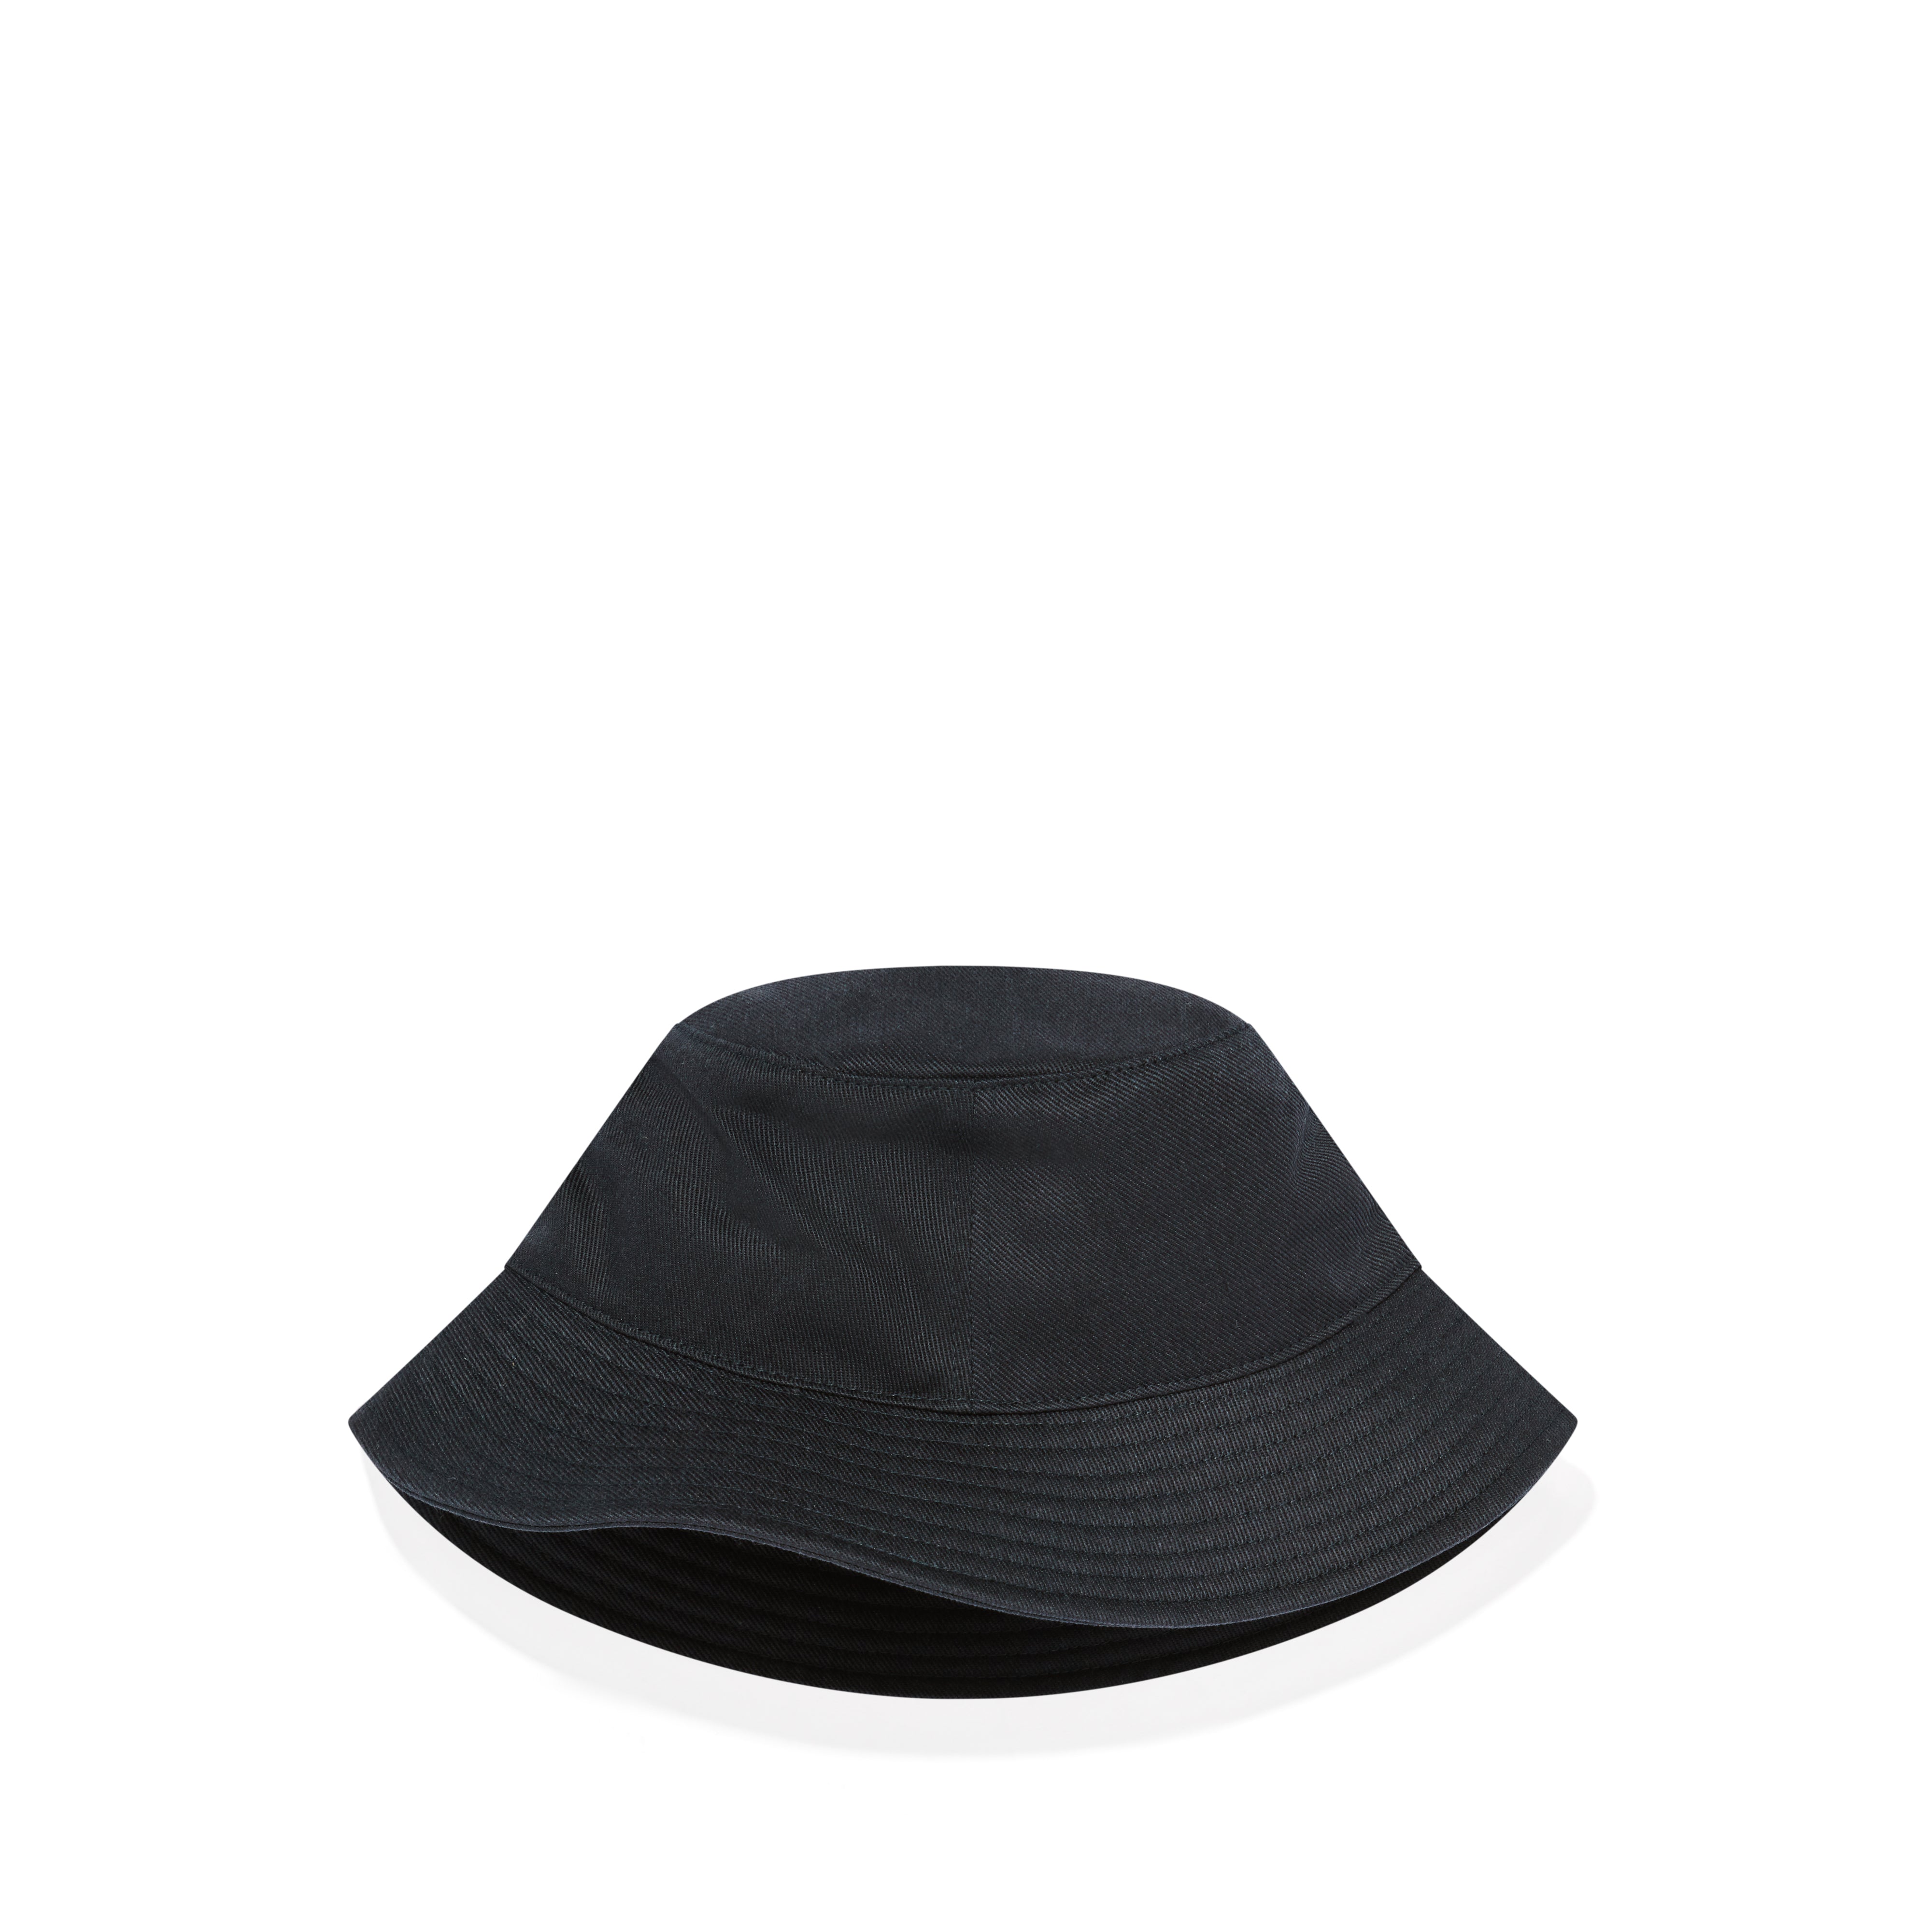 SEQUEL BUCKET HAT BLACK 61％以上節約 - 帽子